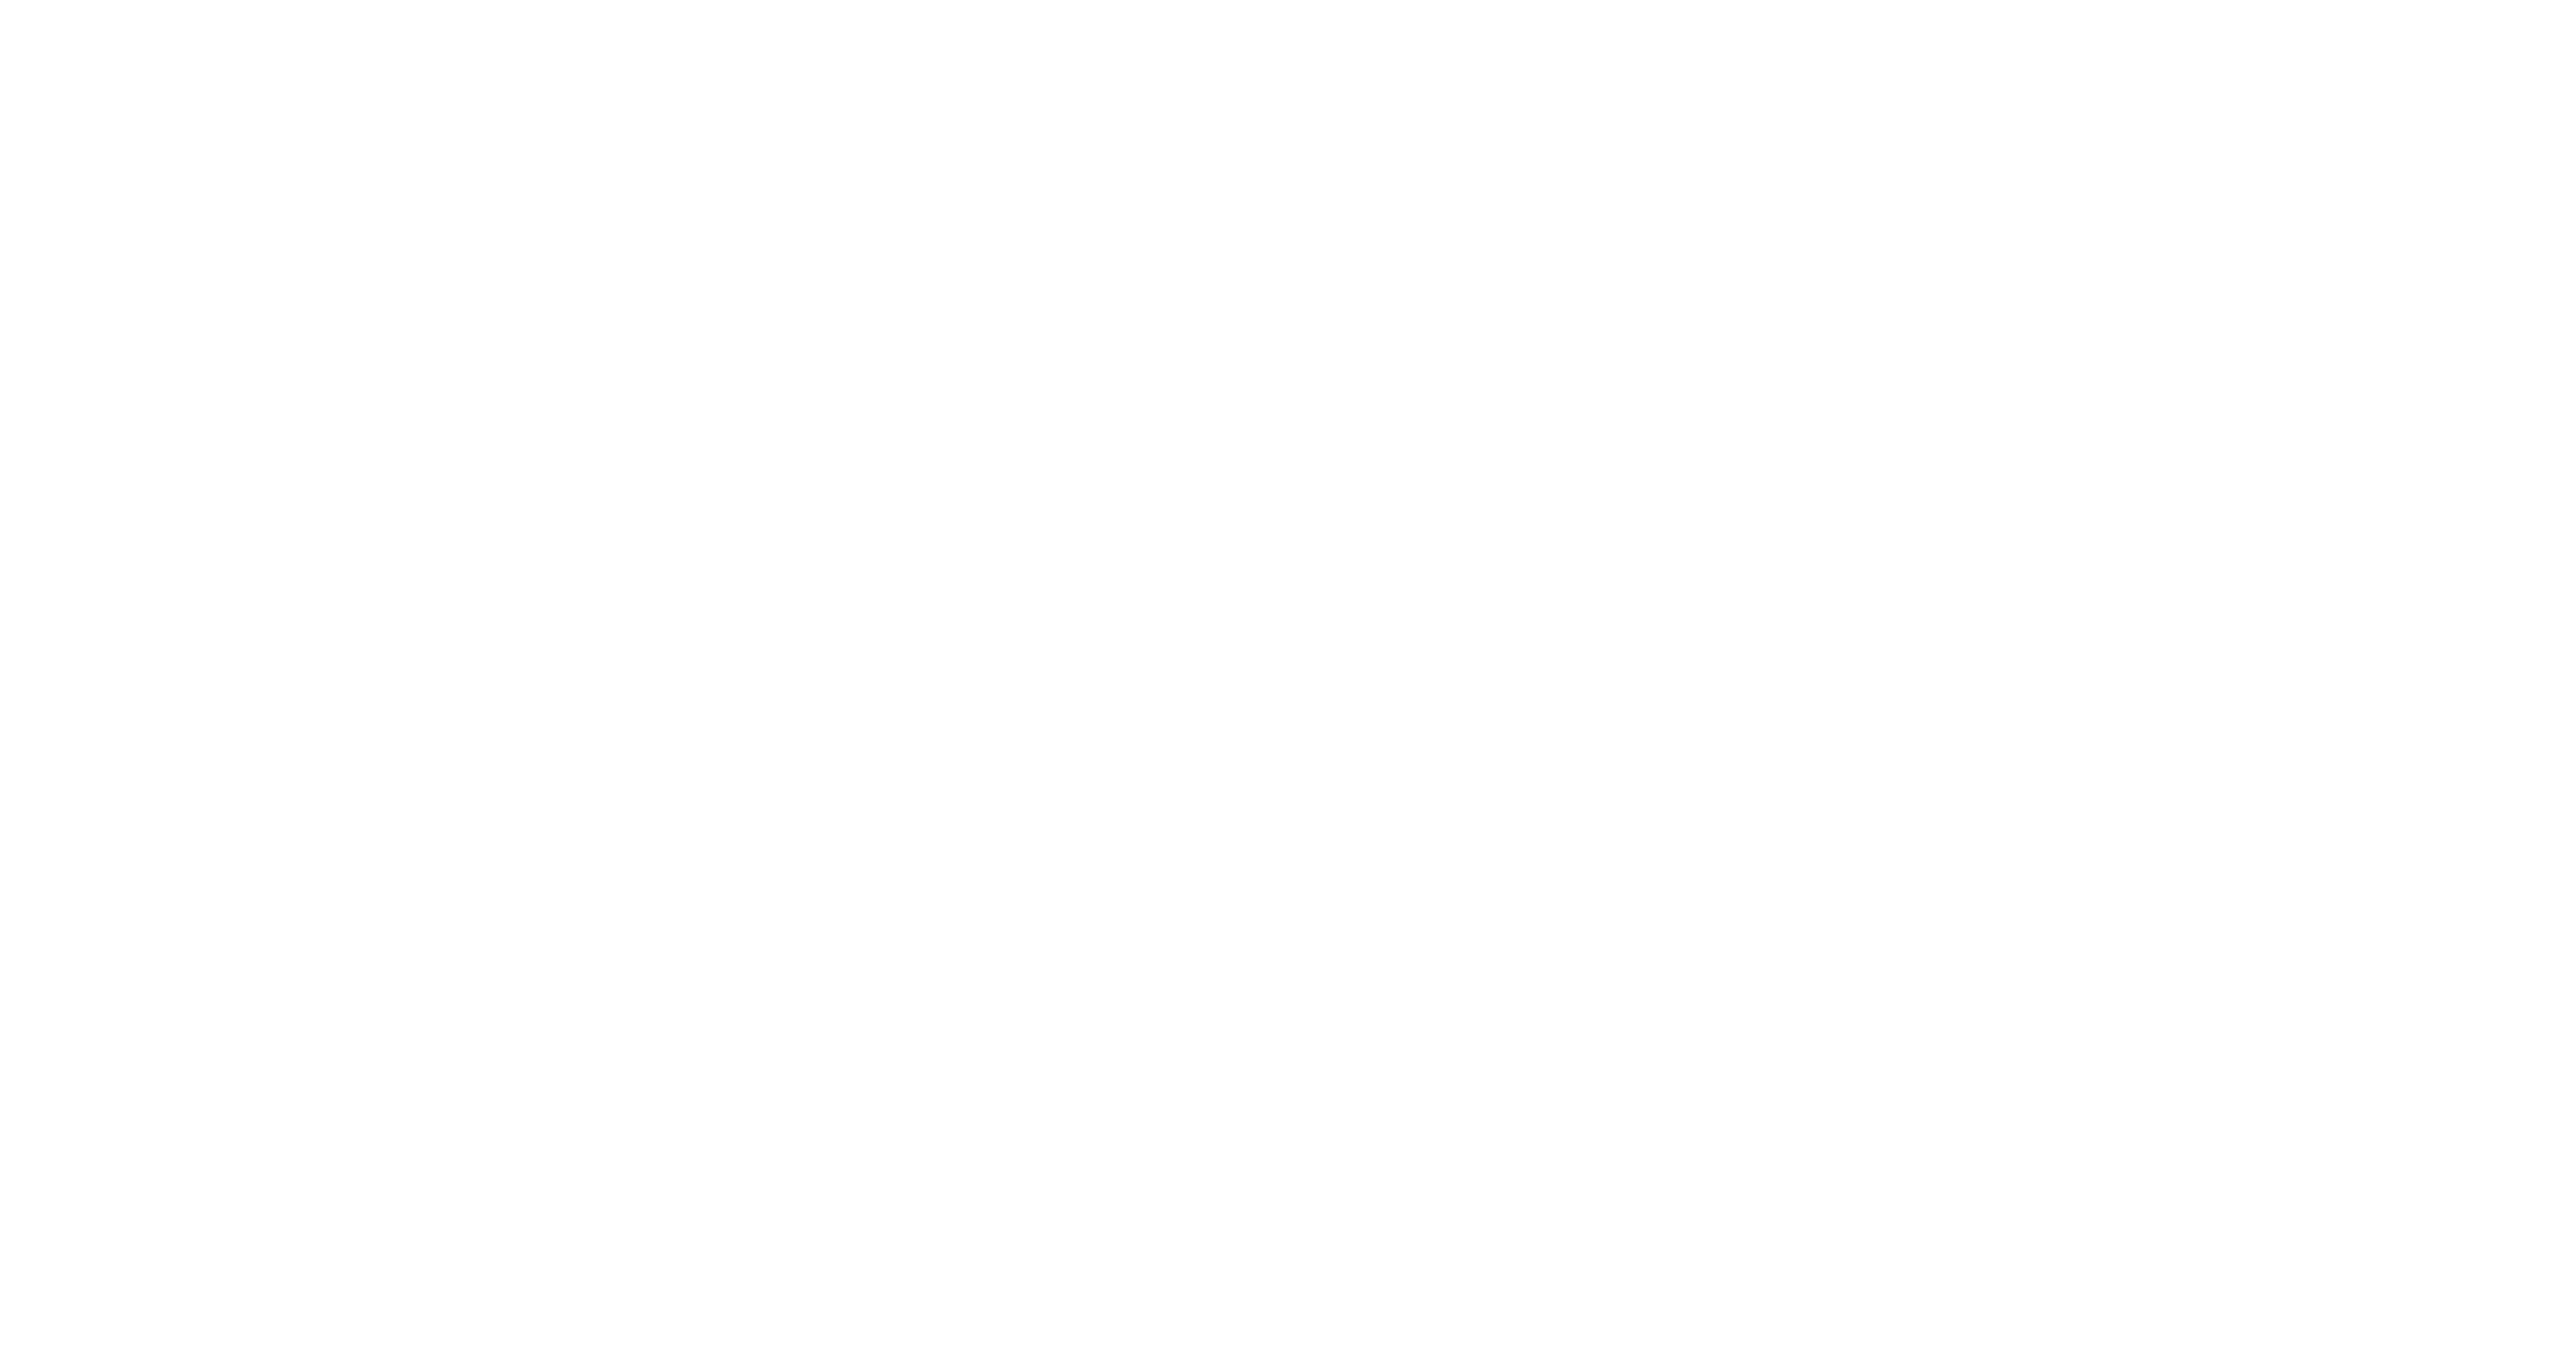 Official Selection Sedona Film Festival 2020